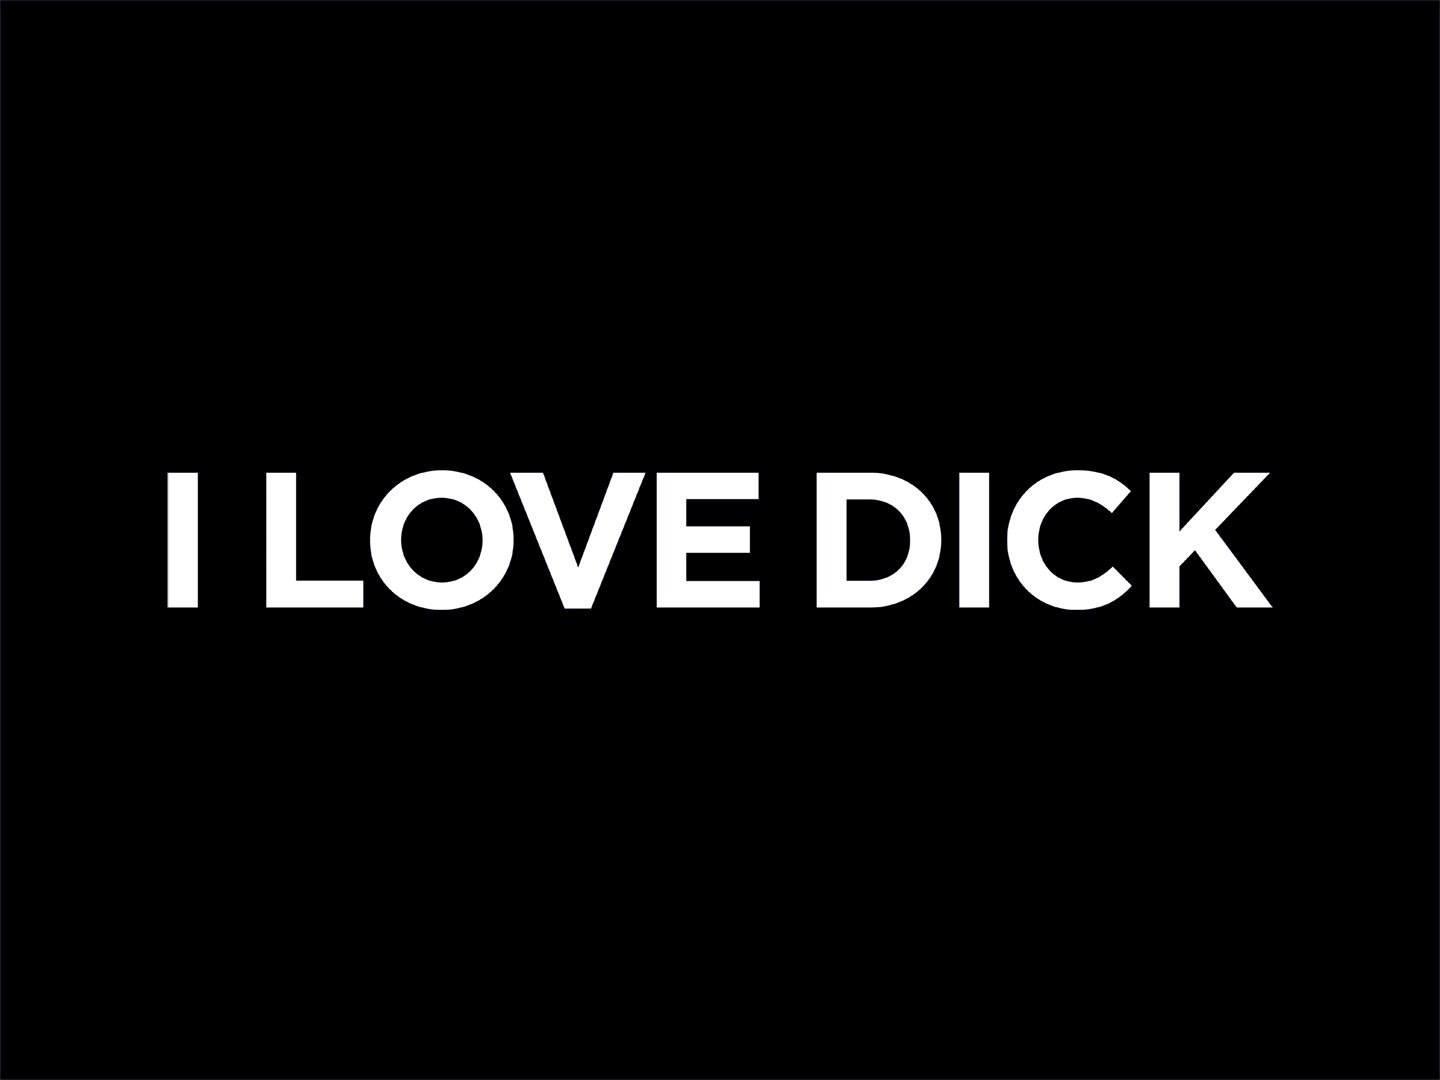 I love dick stories